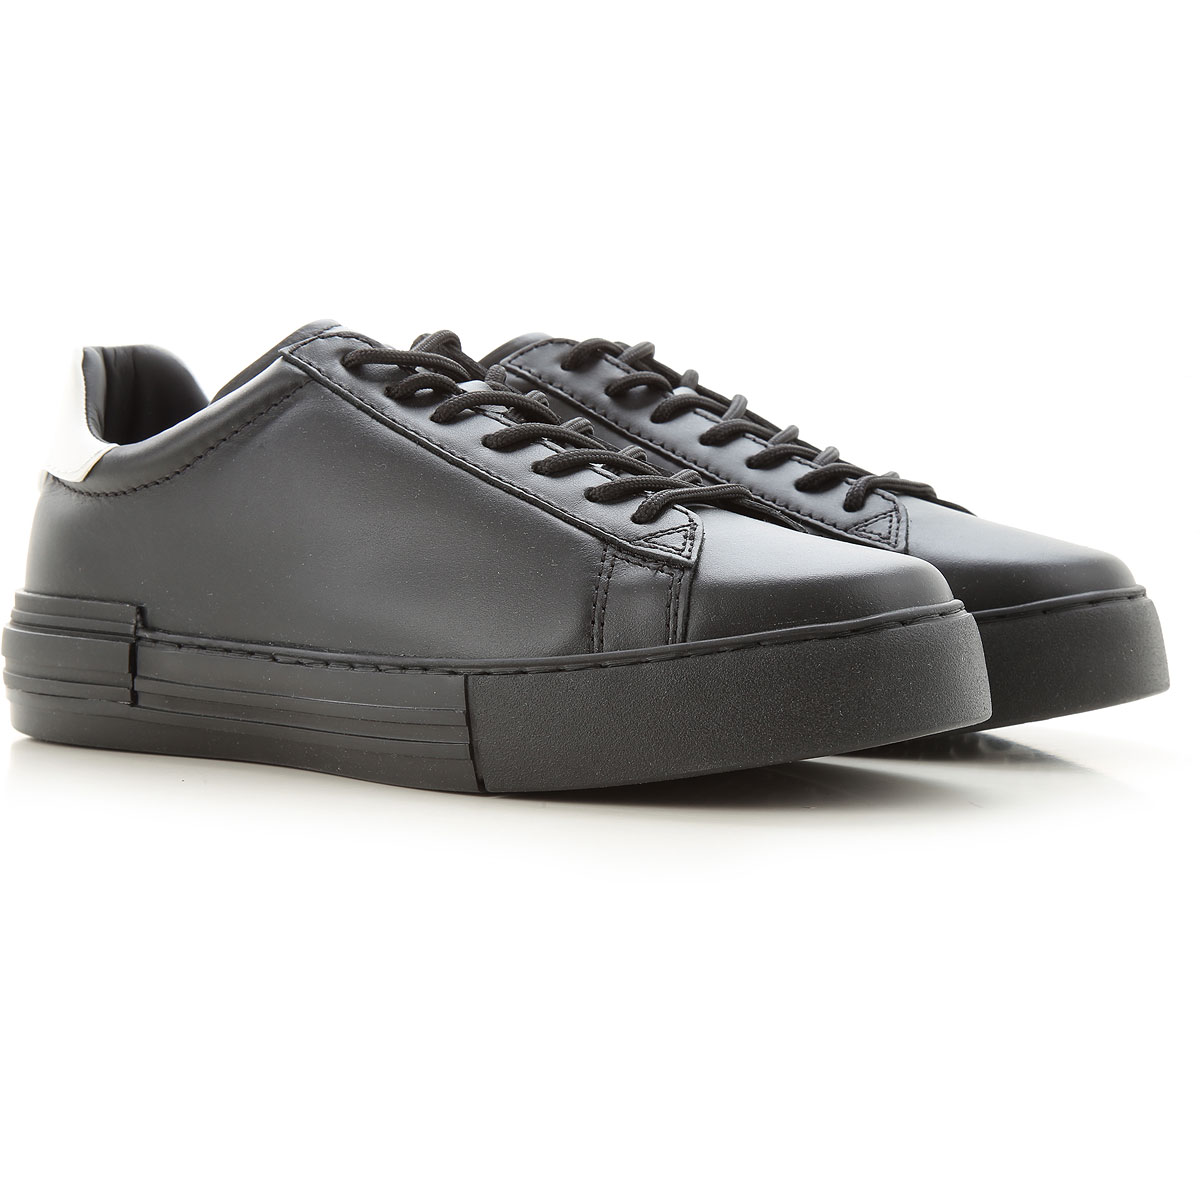 Mens Shoes Hogan, Style code: hxm5260cw20kfm0002--